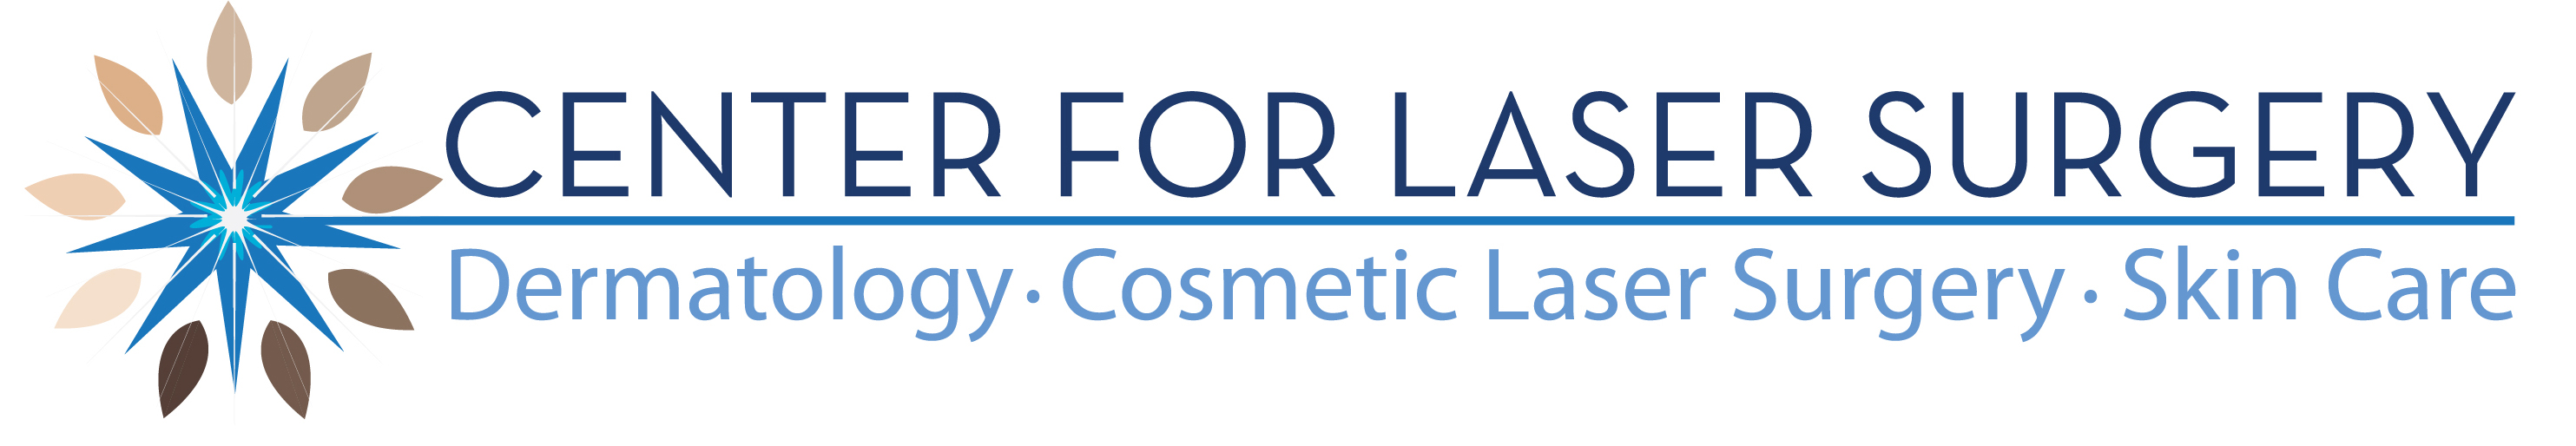 Center for Laser Surgery Dermatology